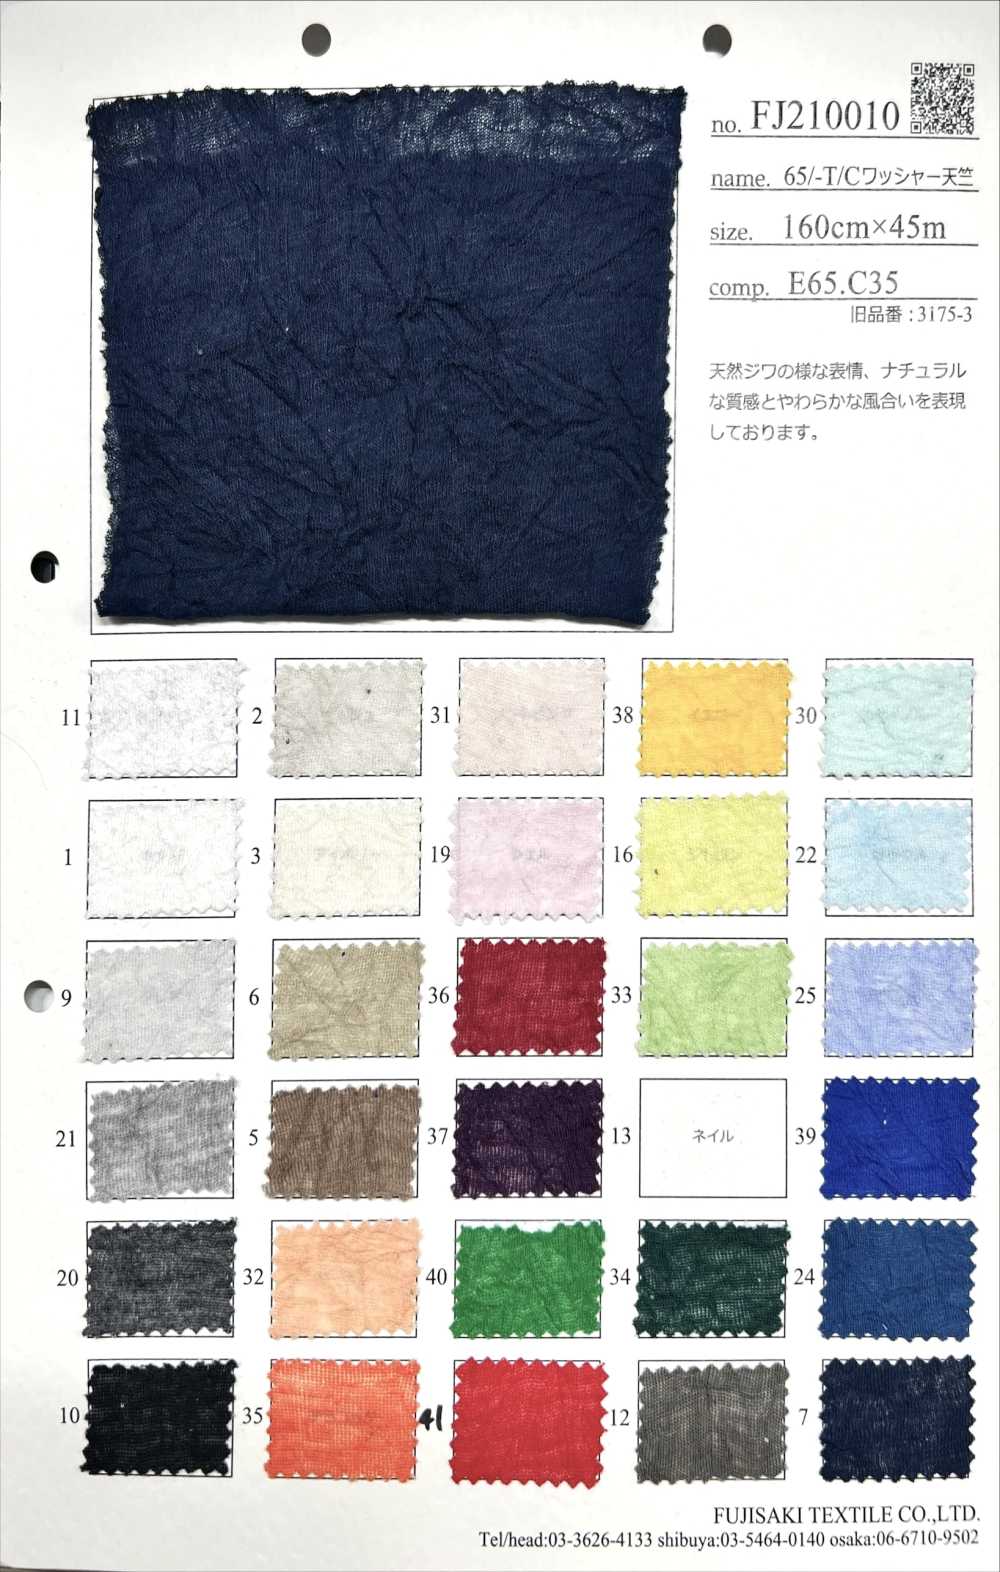 FJ210010 Jérsei Processado Por Arruela 65/-T/C[Têxtil / Tecido] Fujisaki Textile